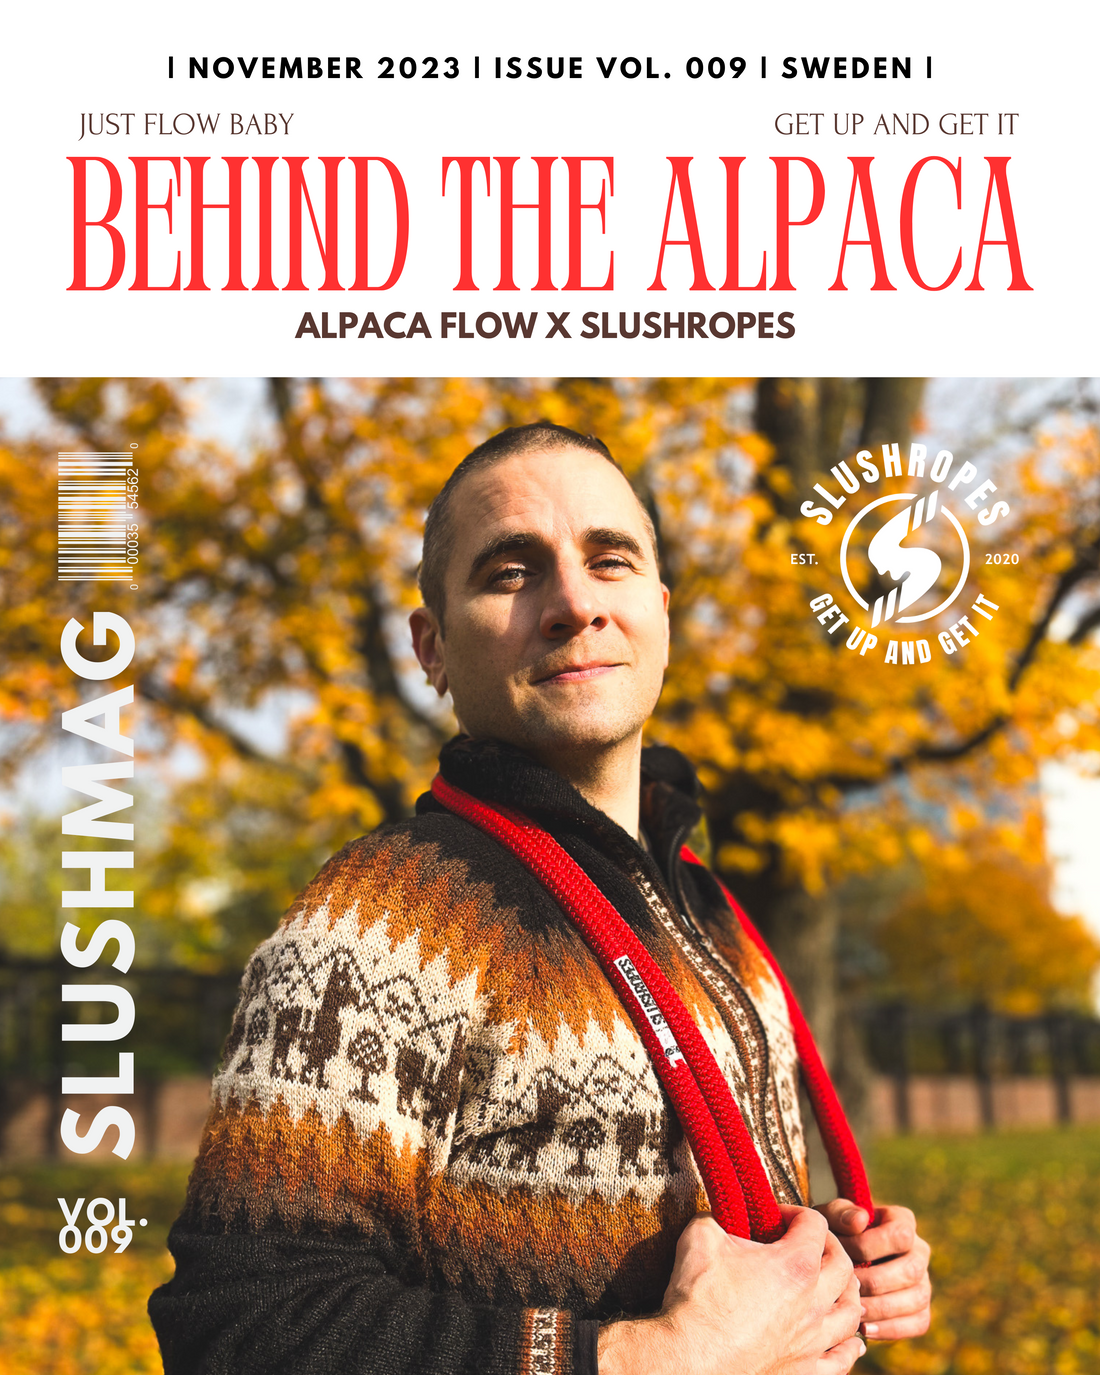 Interview With Sinisa - The Alpaca Flow X Slushropes Collaboration